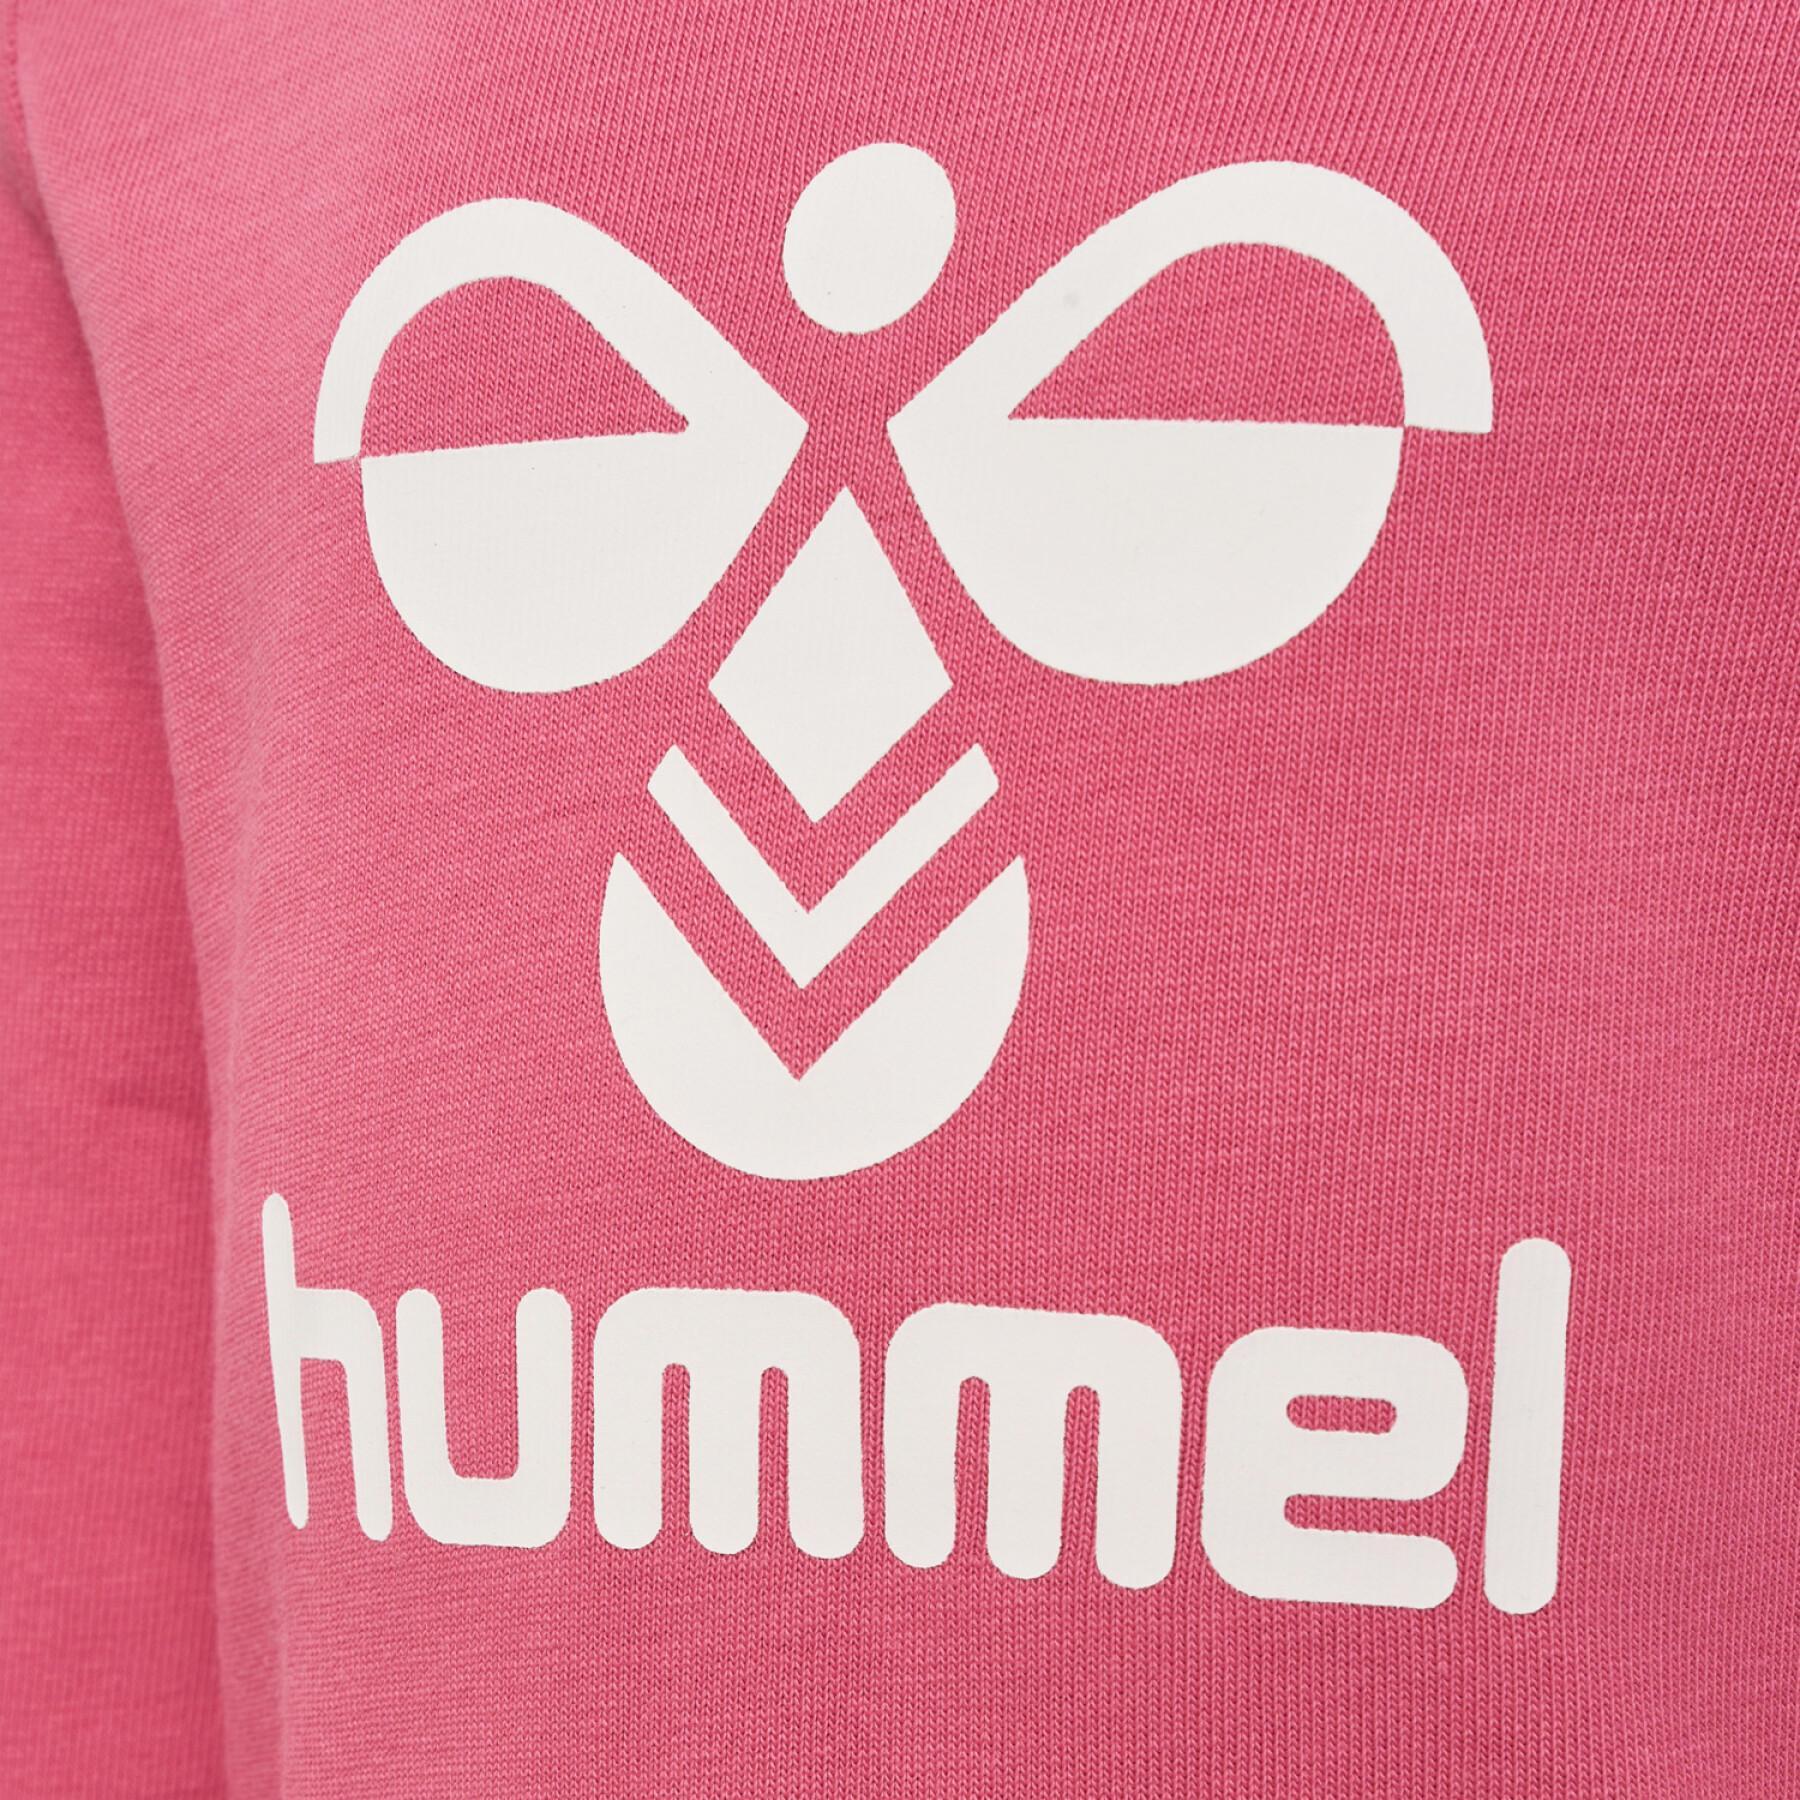 Dres dla niemowląt Hummel hmlArine